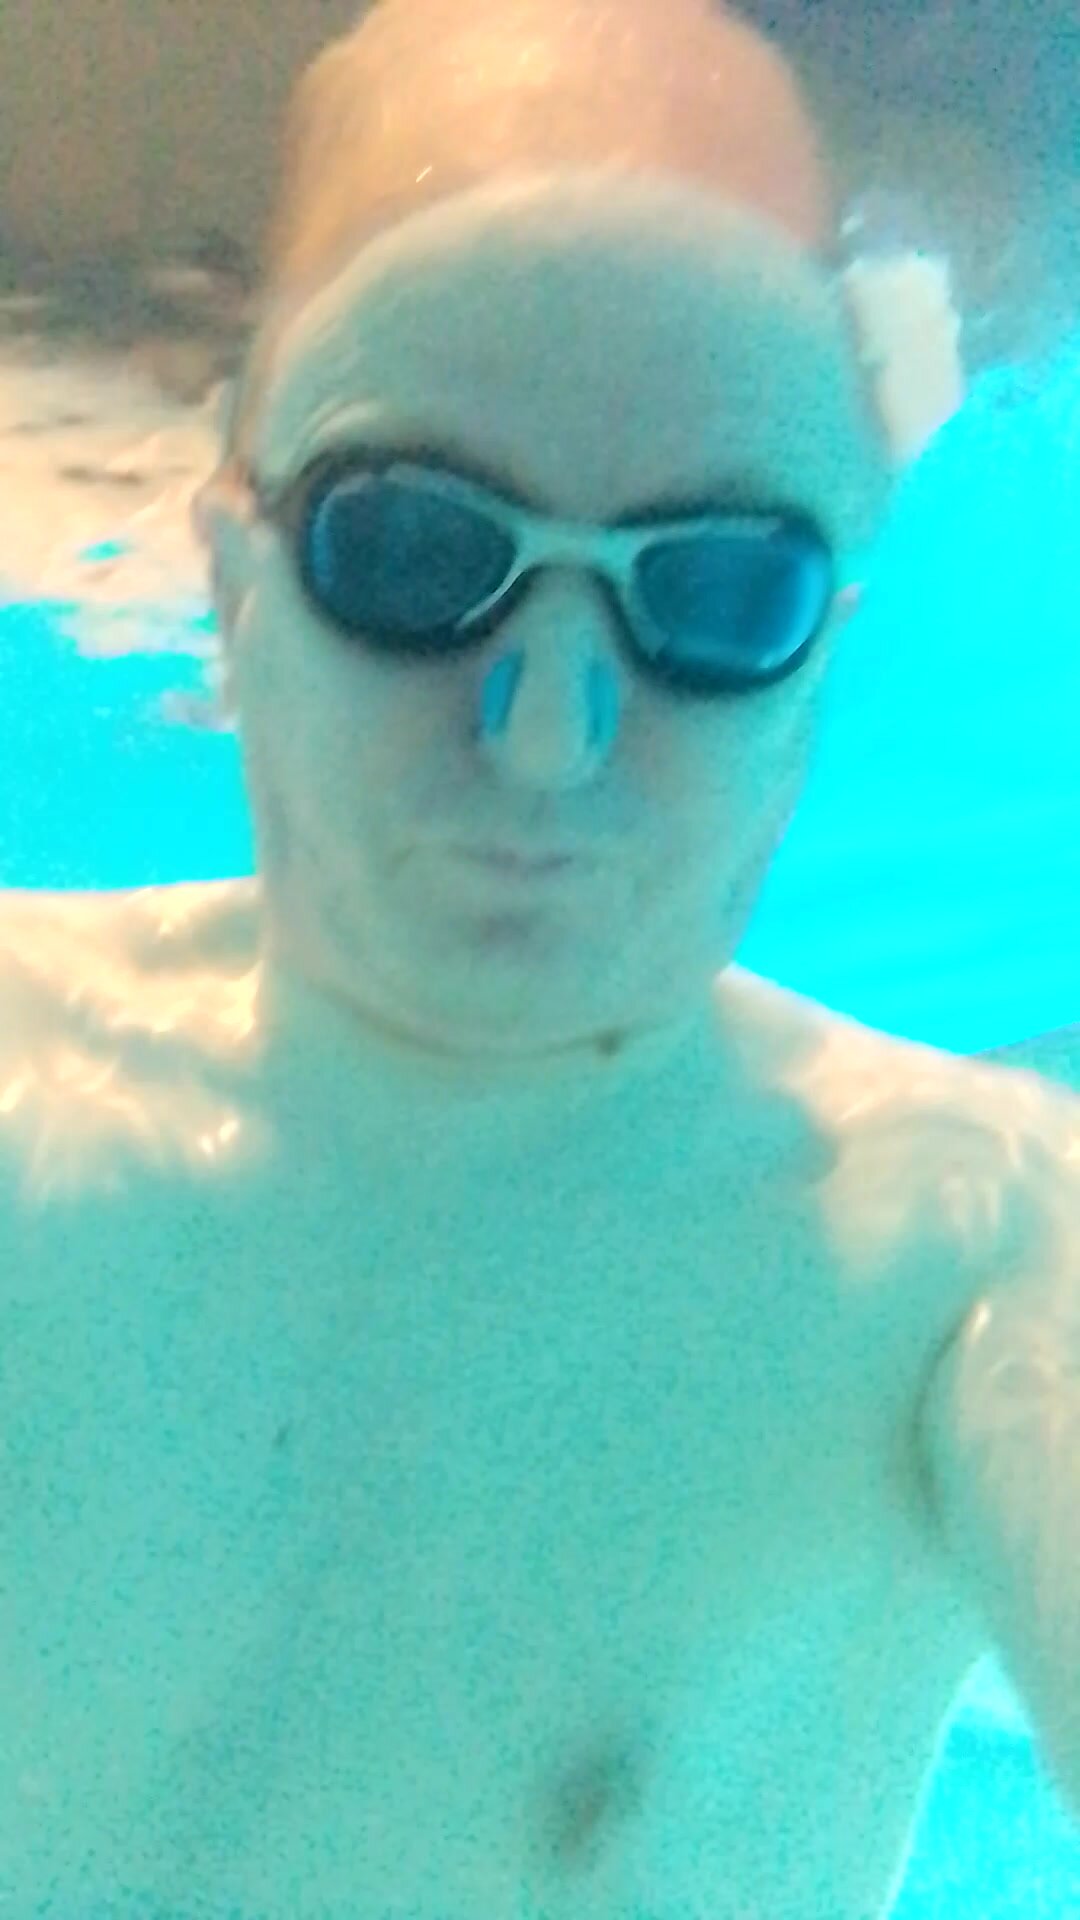 nude underwater wearing cockring in private indoor pool